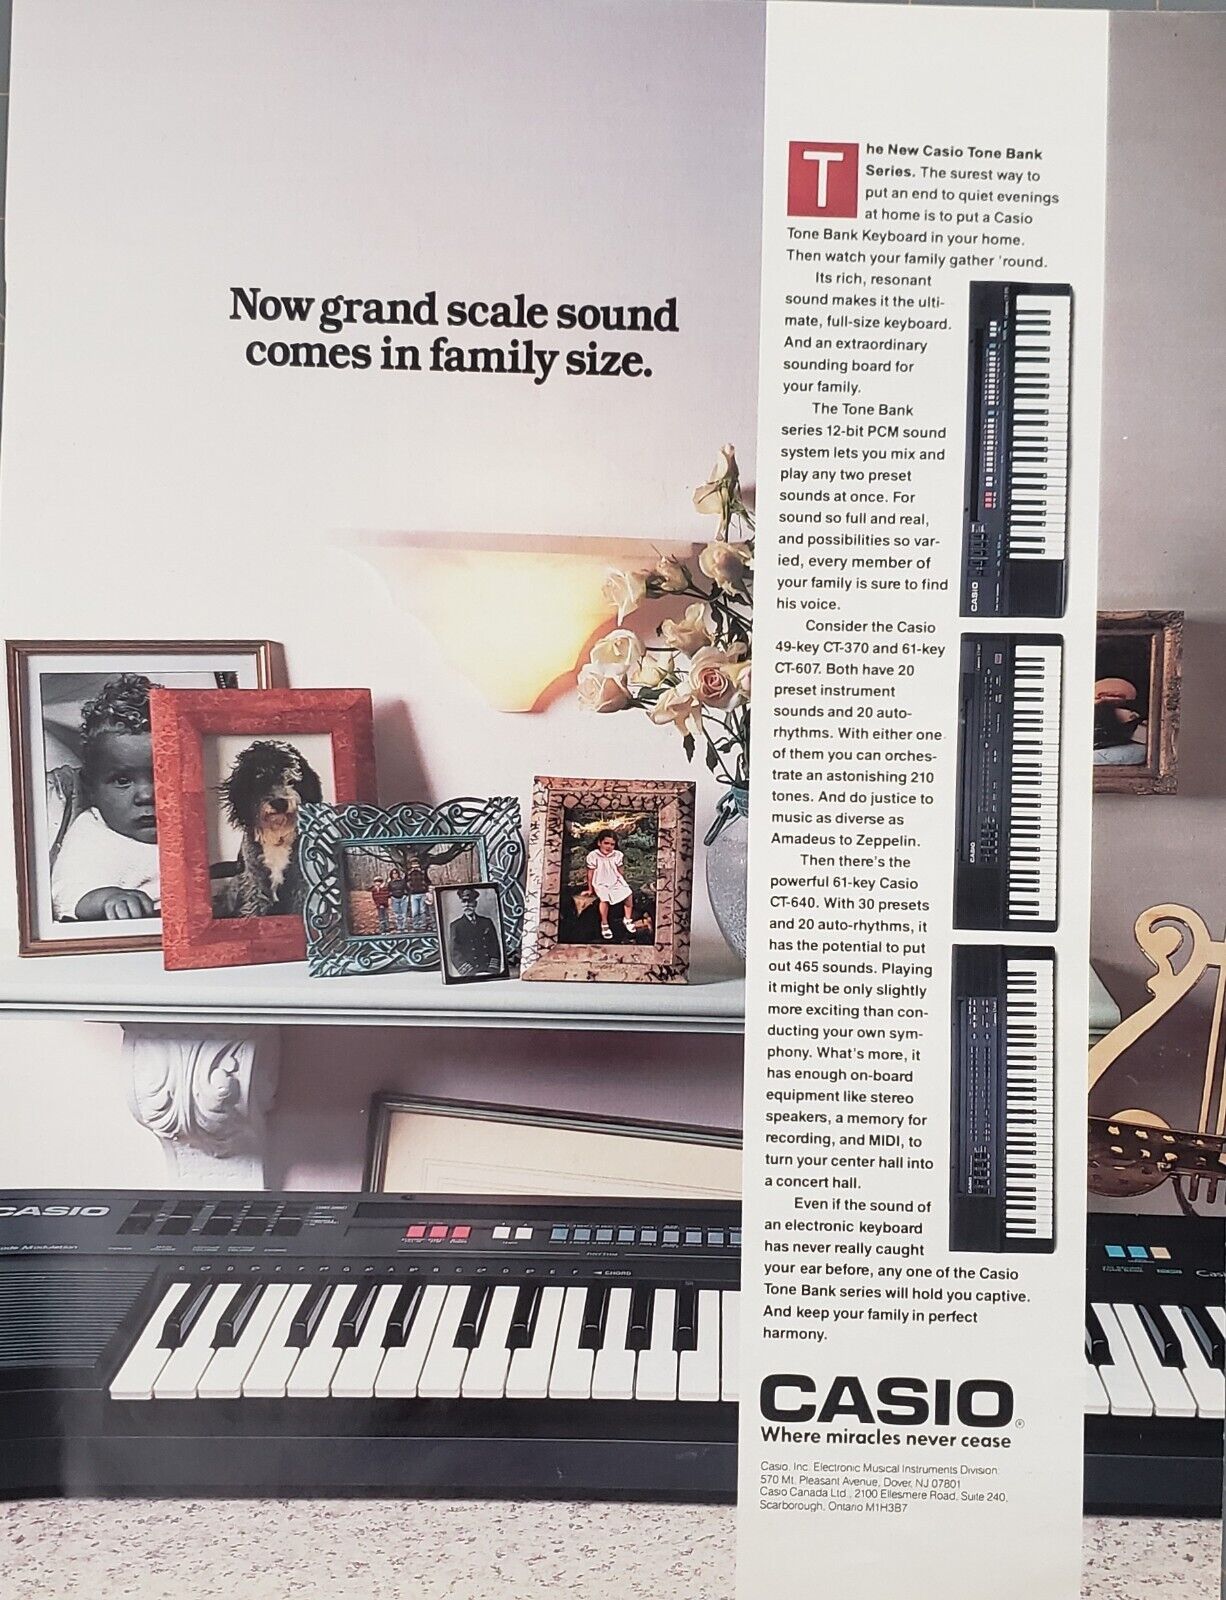 1988 Casio Tone Bank Keyboard Series 12 Bit PCM Mix Play Preset Print Ad